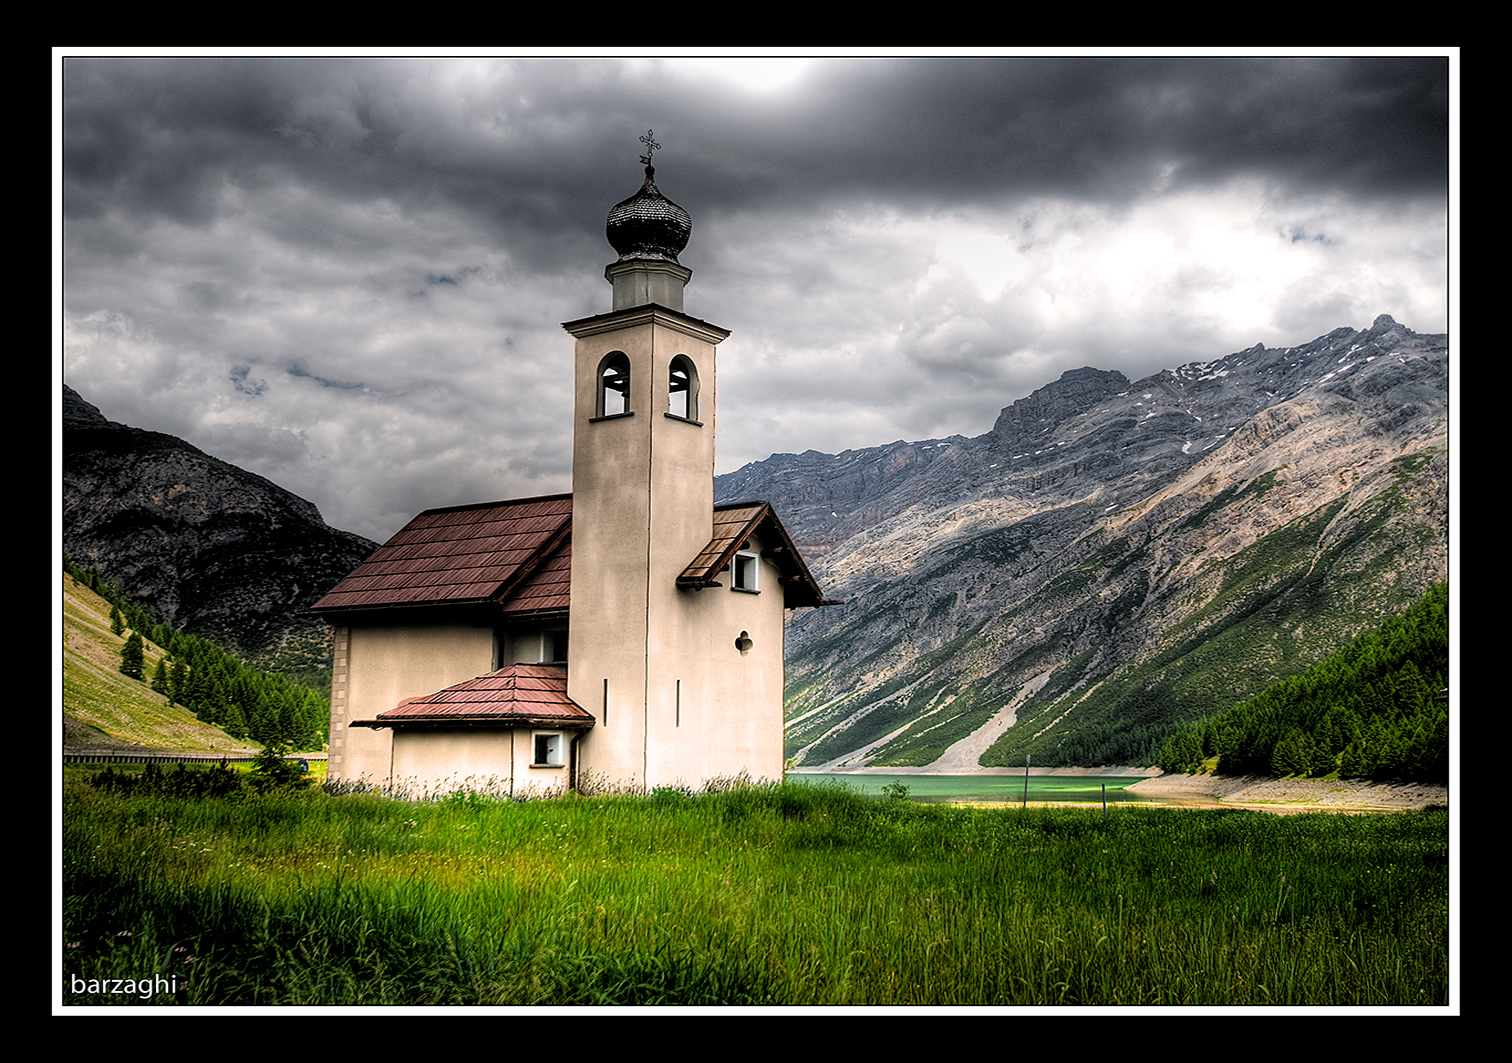  chiesetta alpina